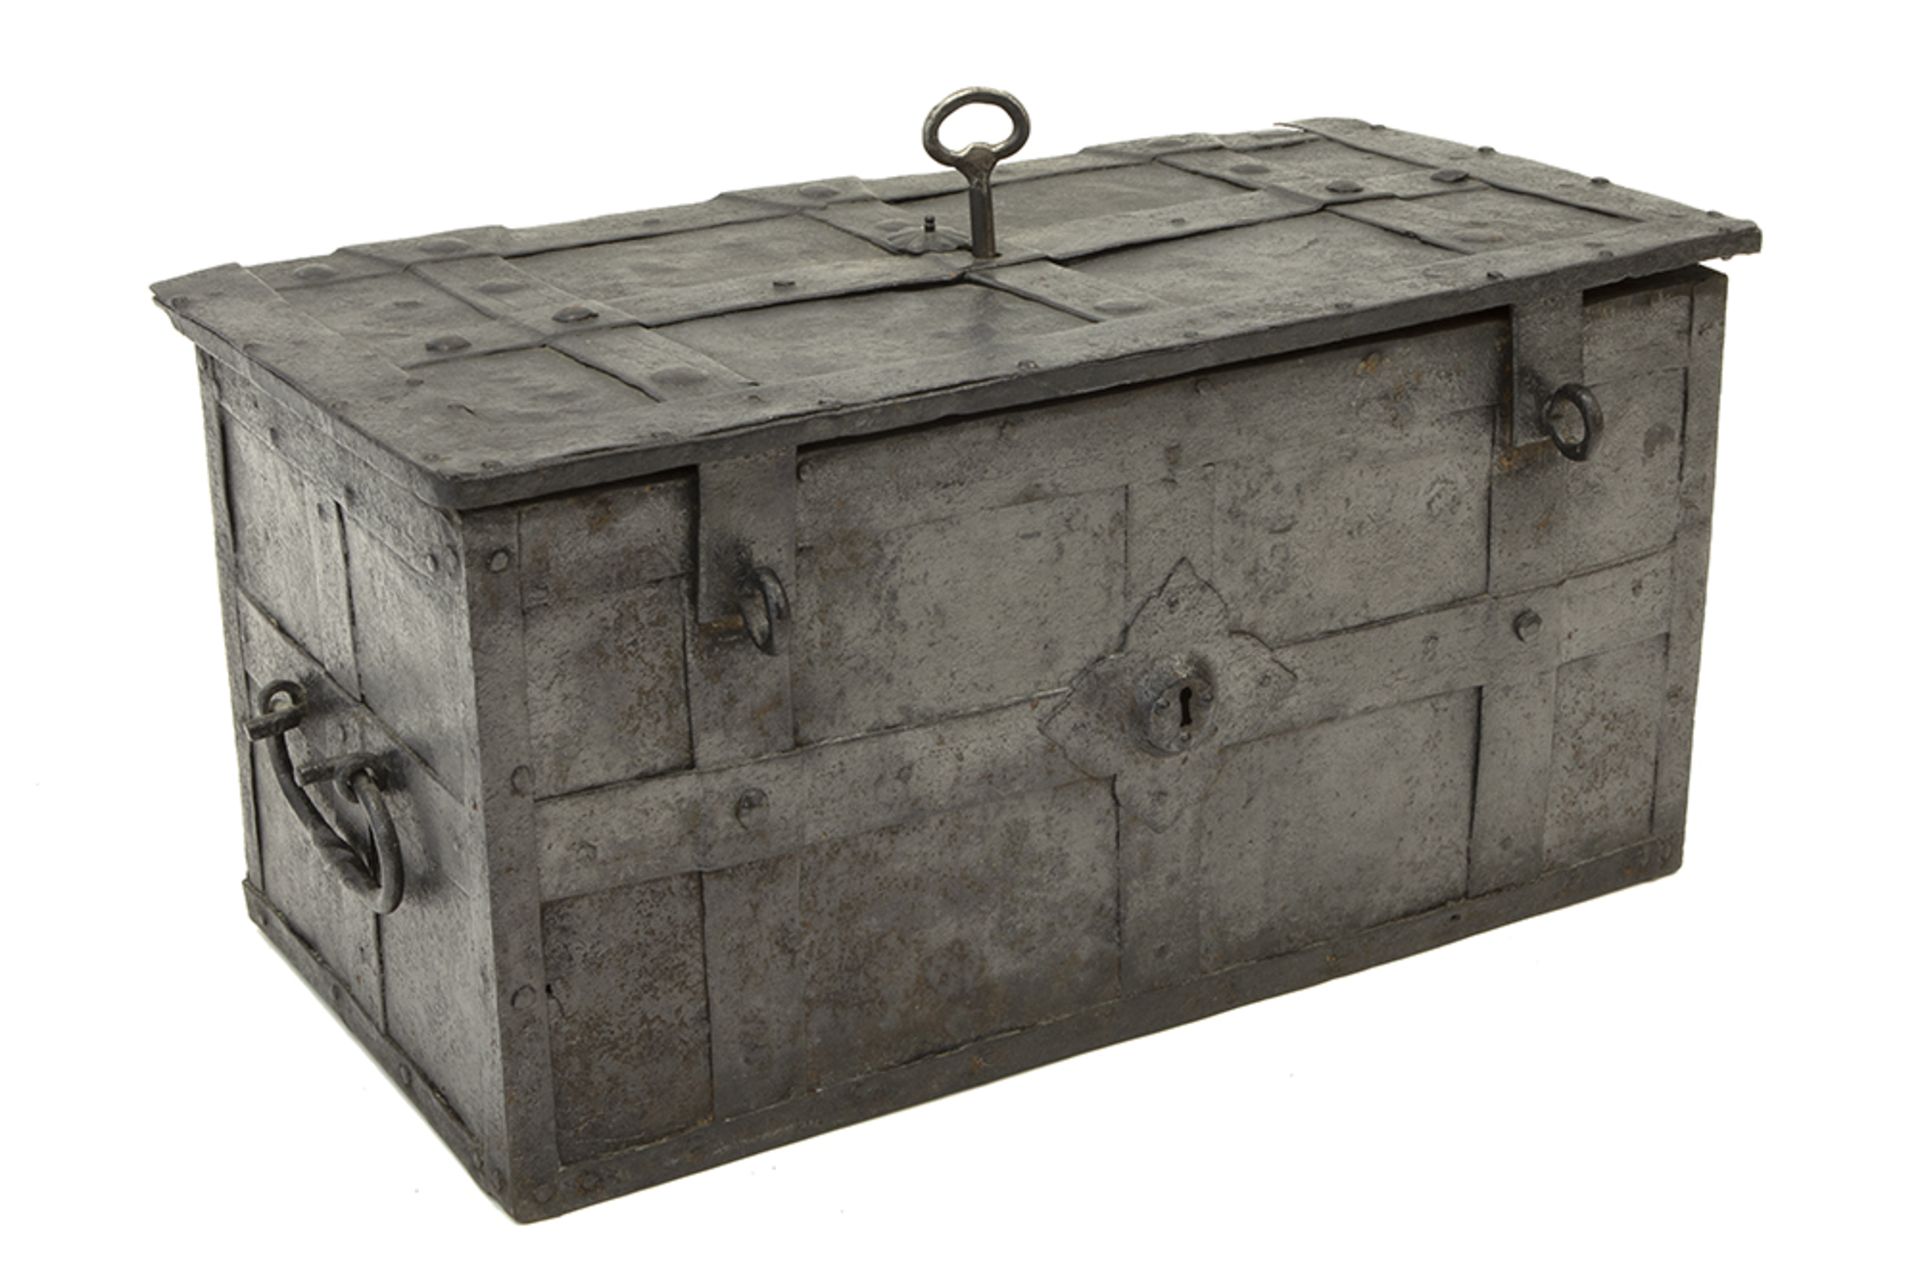 17th/18th Cent. iron chest with a nice lock || Zeventiende/achttiende eeuwse ijzeren kist met een